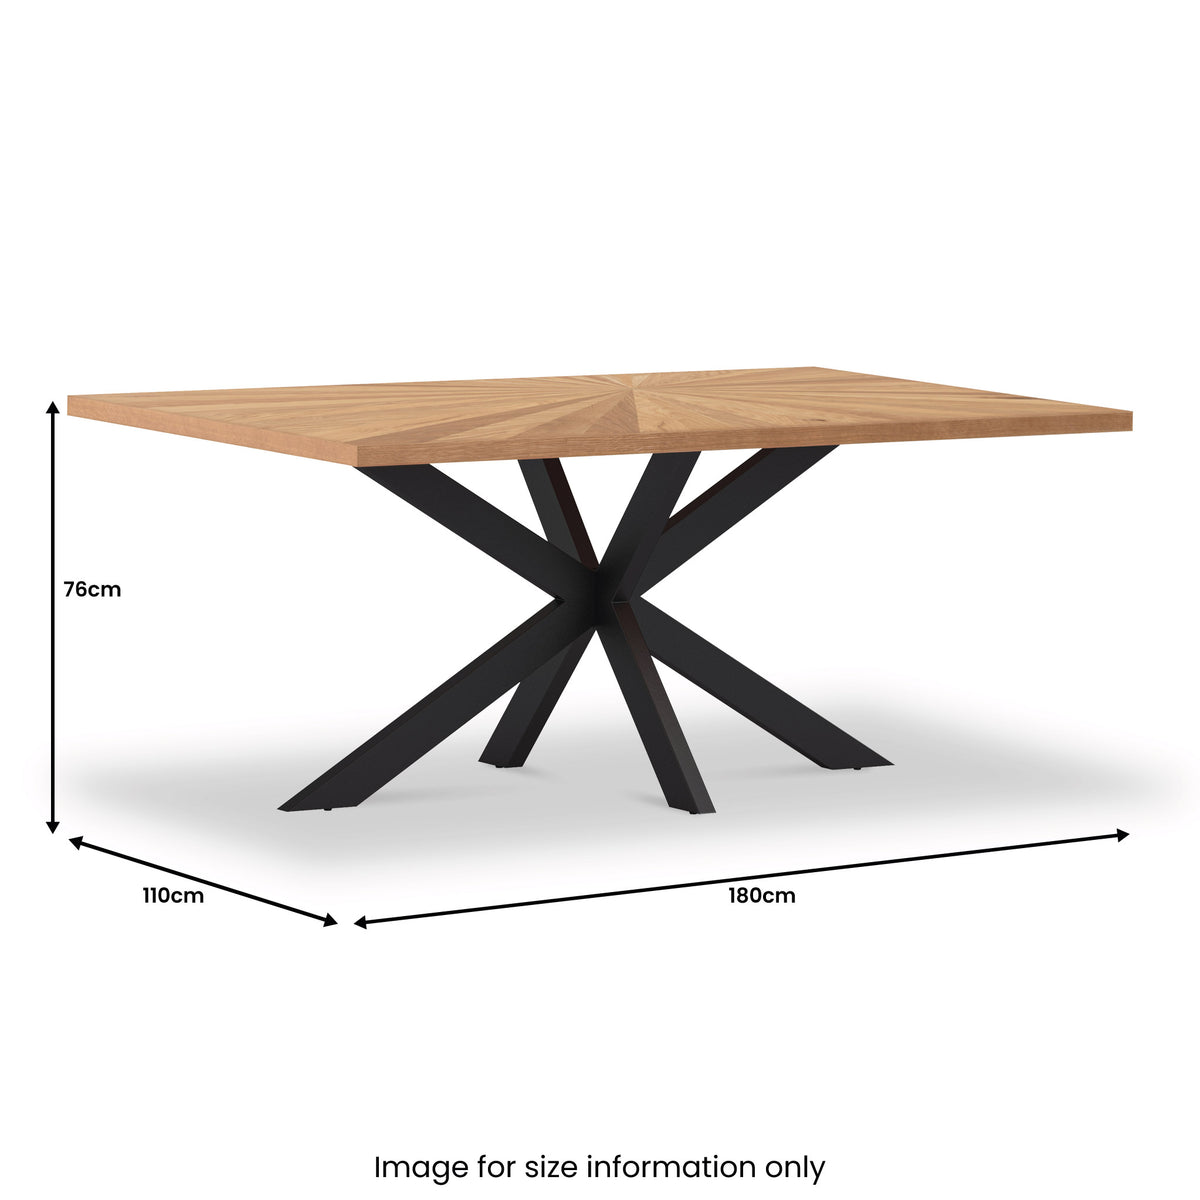 Sunburst Oak 180cm Rectangular Dining Table dimensions